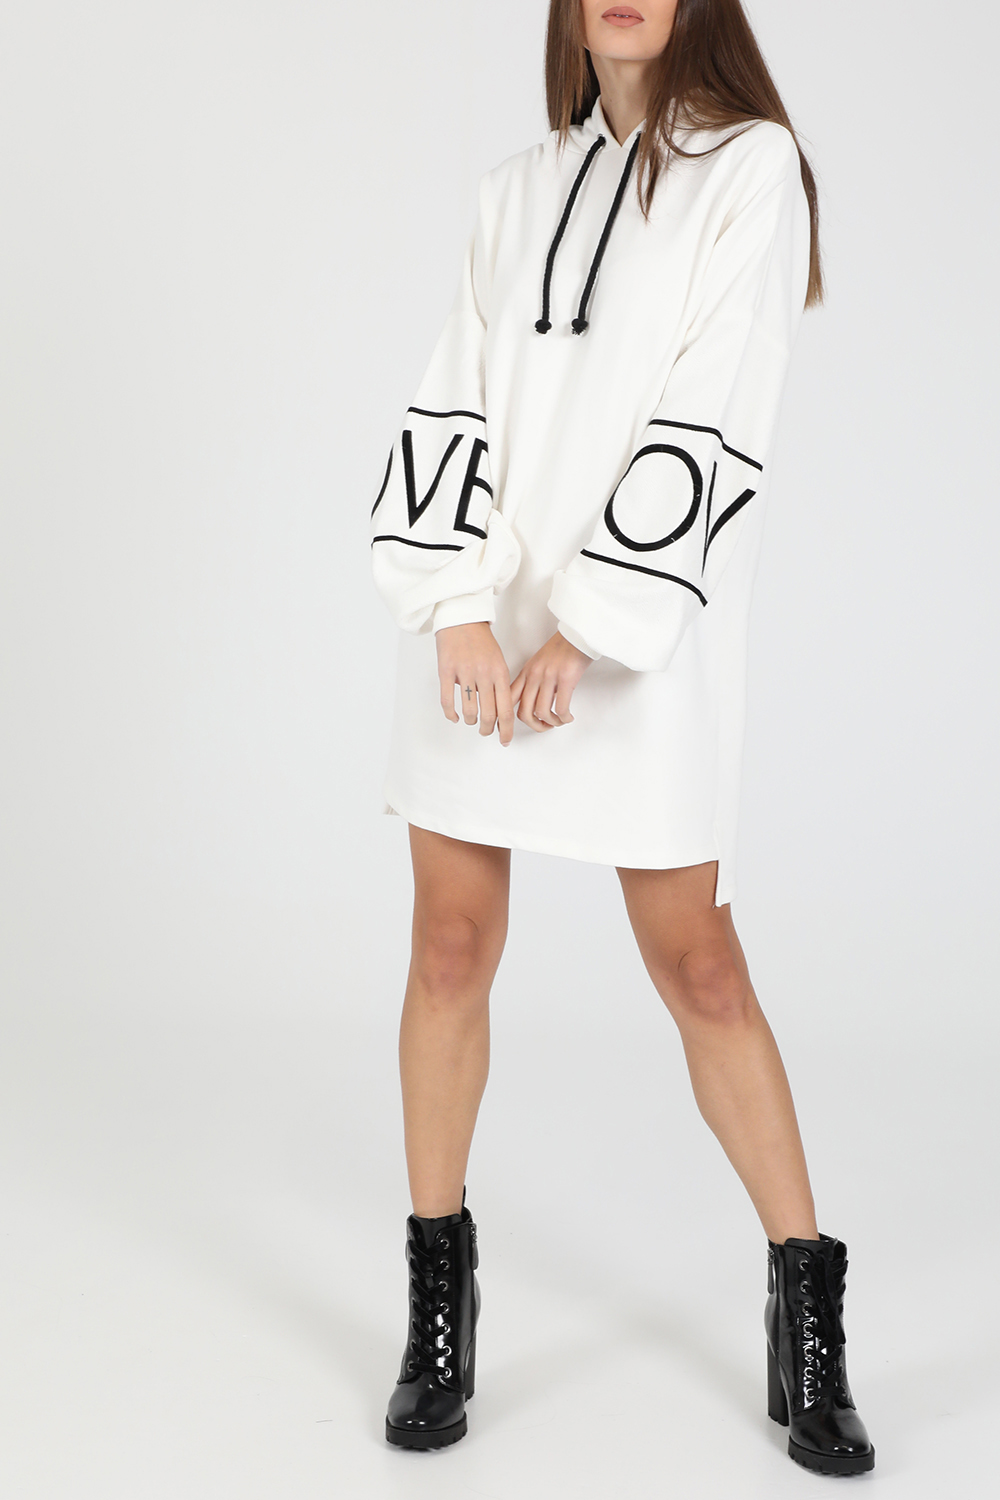 LA DOLLS – Γυναικειο mini φορεμα LA DOLLS COSY λευκο